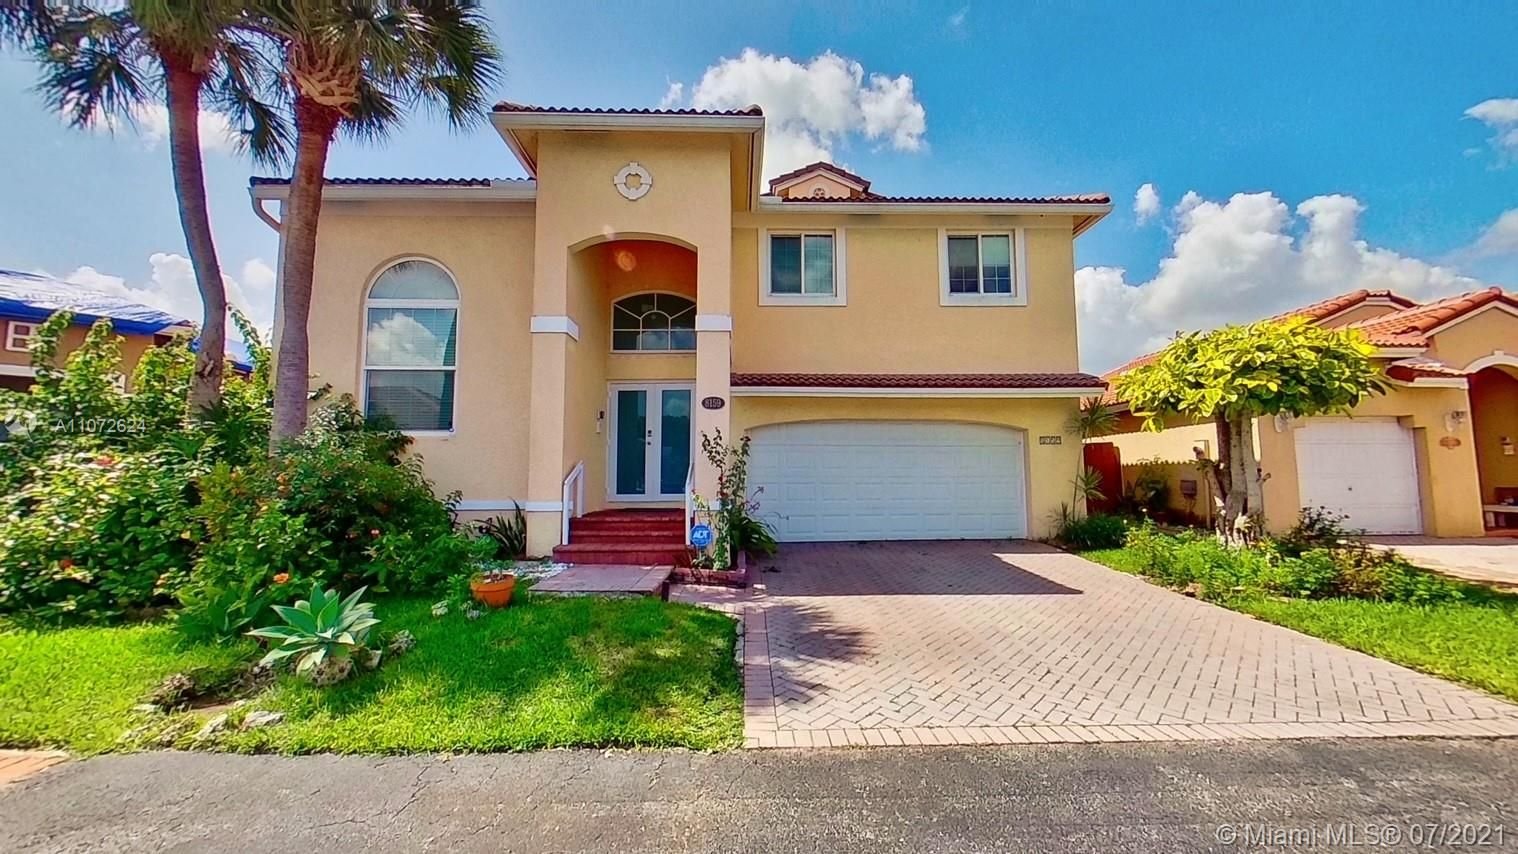 Real estate property located at 8159 158th Pl, Miami-Dade County, Miami, FL